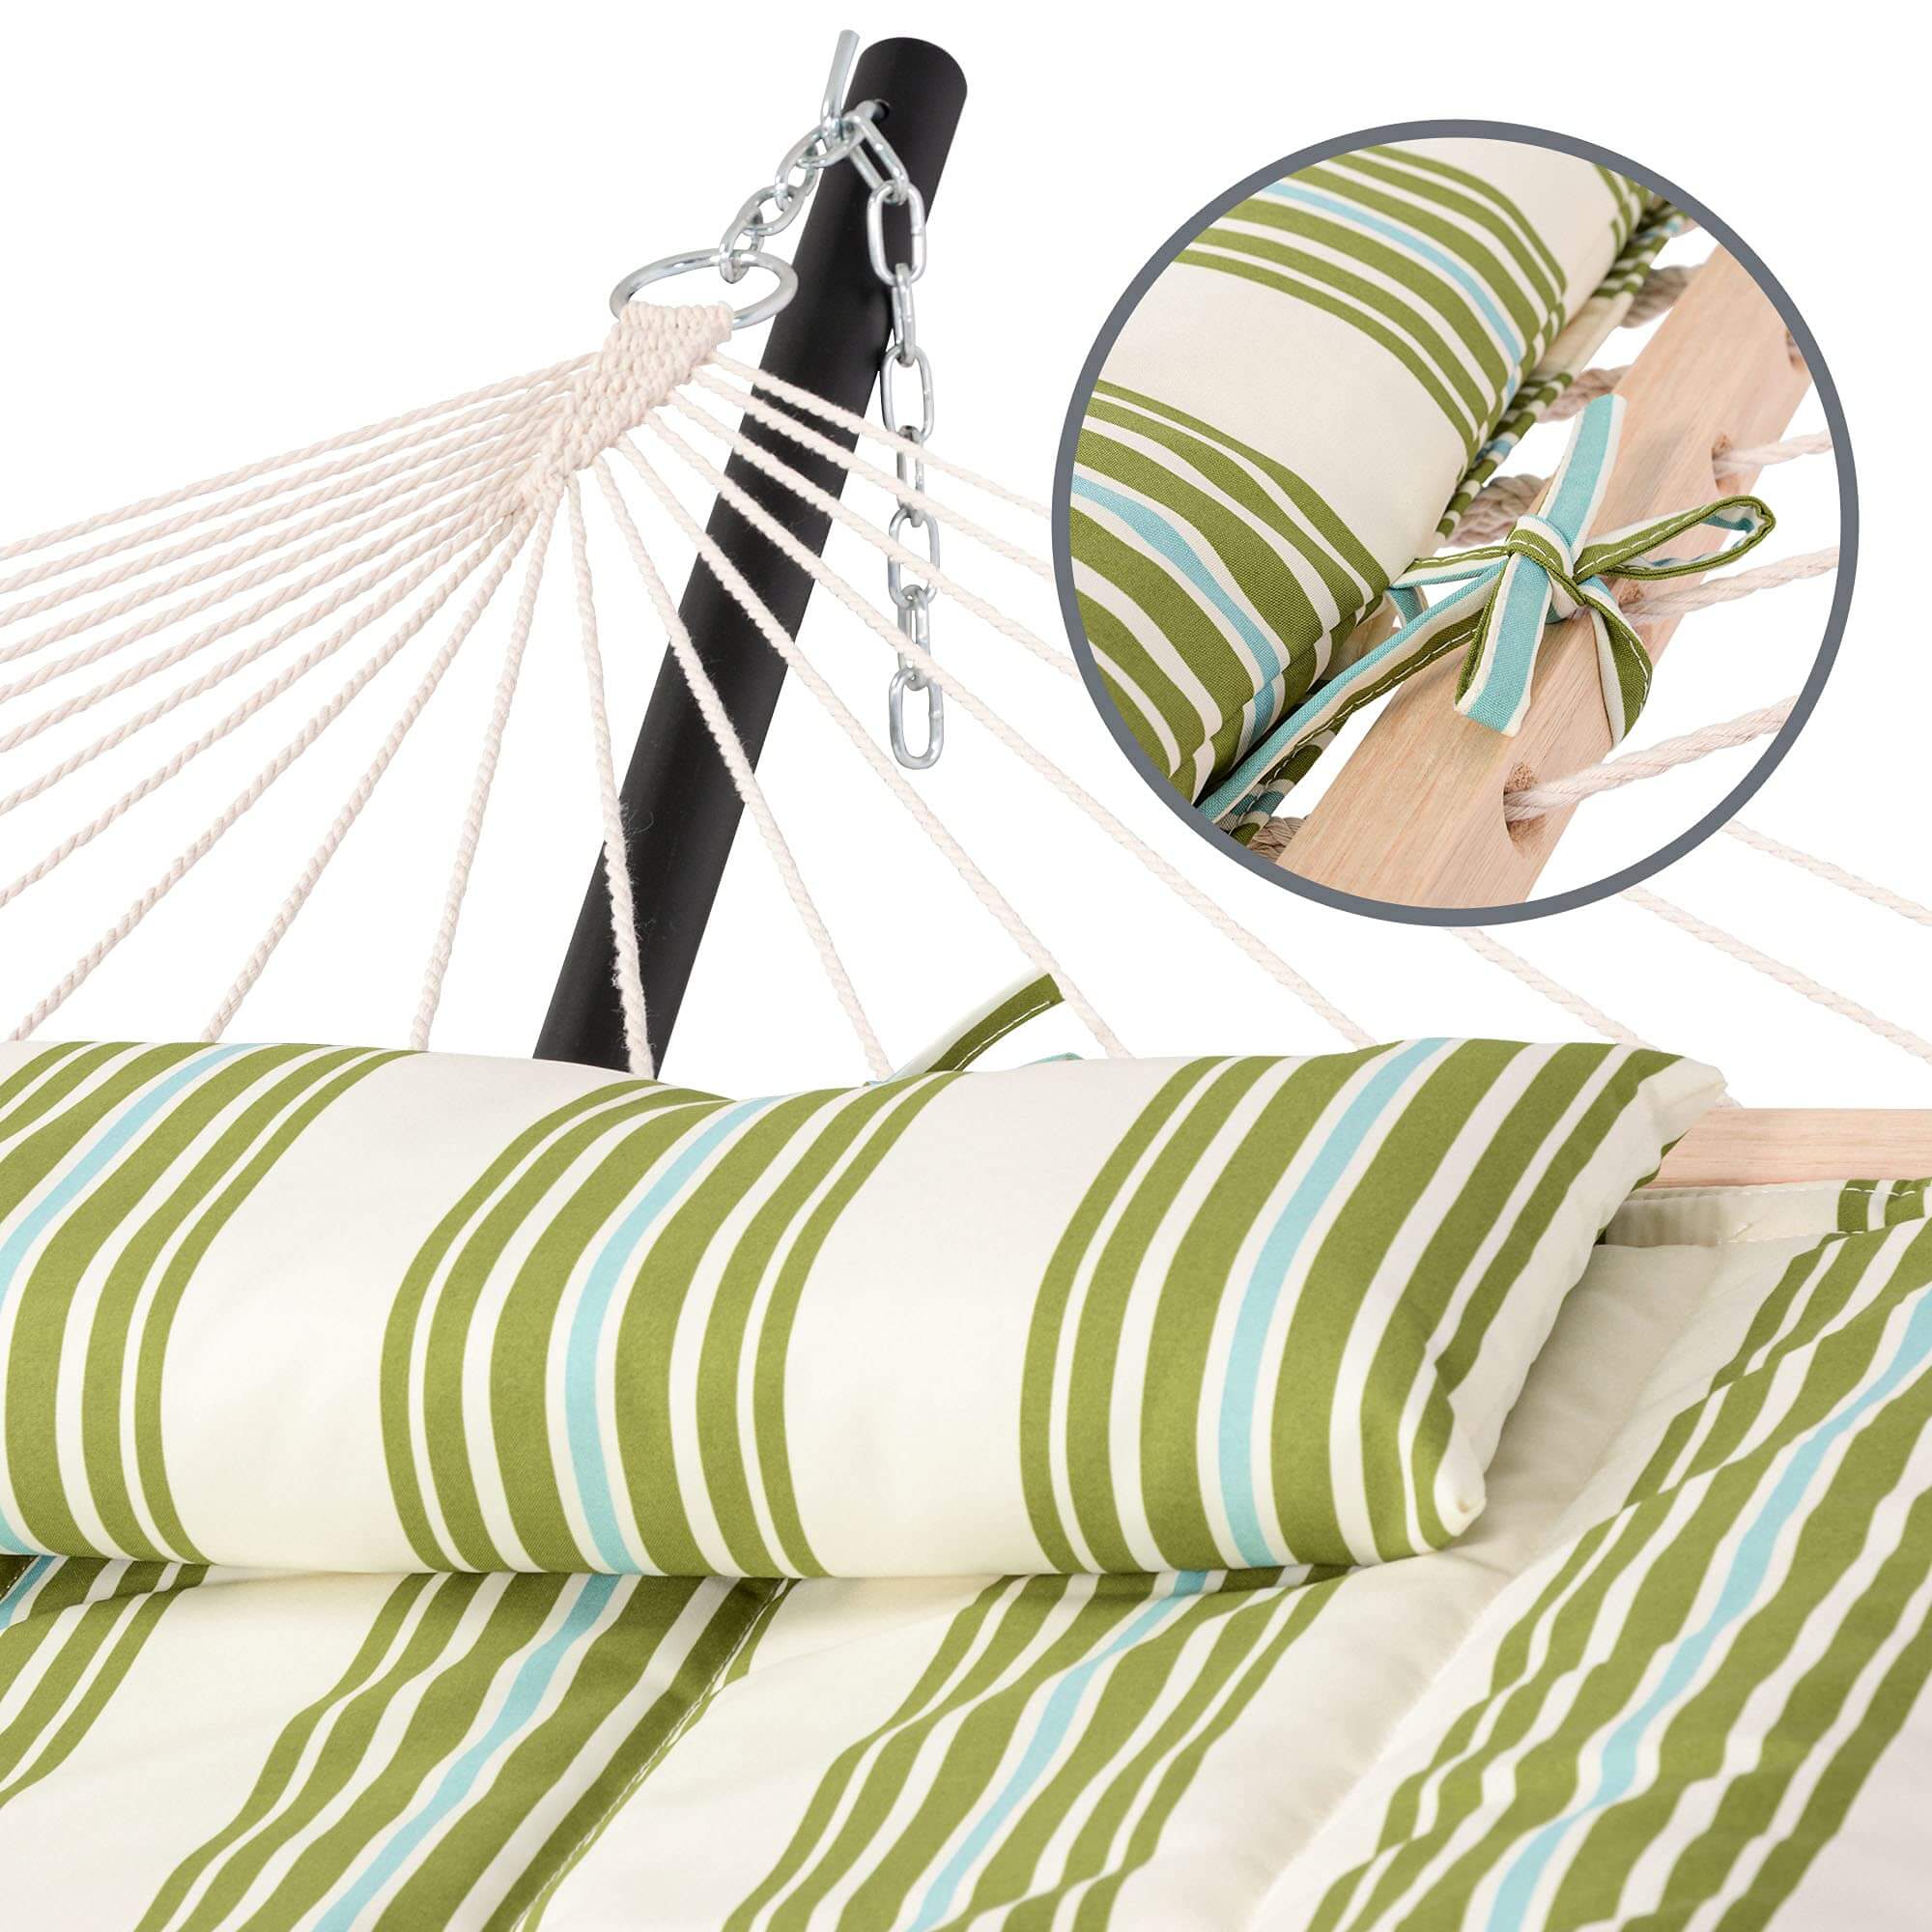 SUNCREAT-2-Layer-Cotton-Rope-Hammock-Green-Beige#color_green-beige